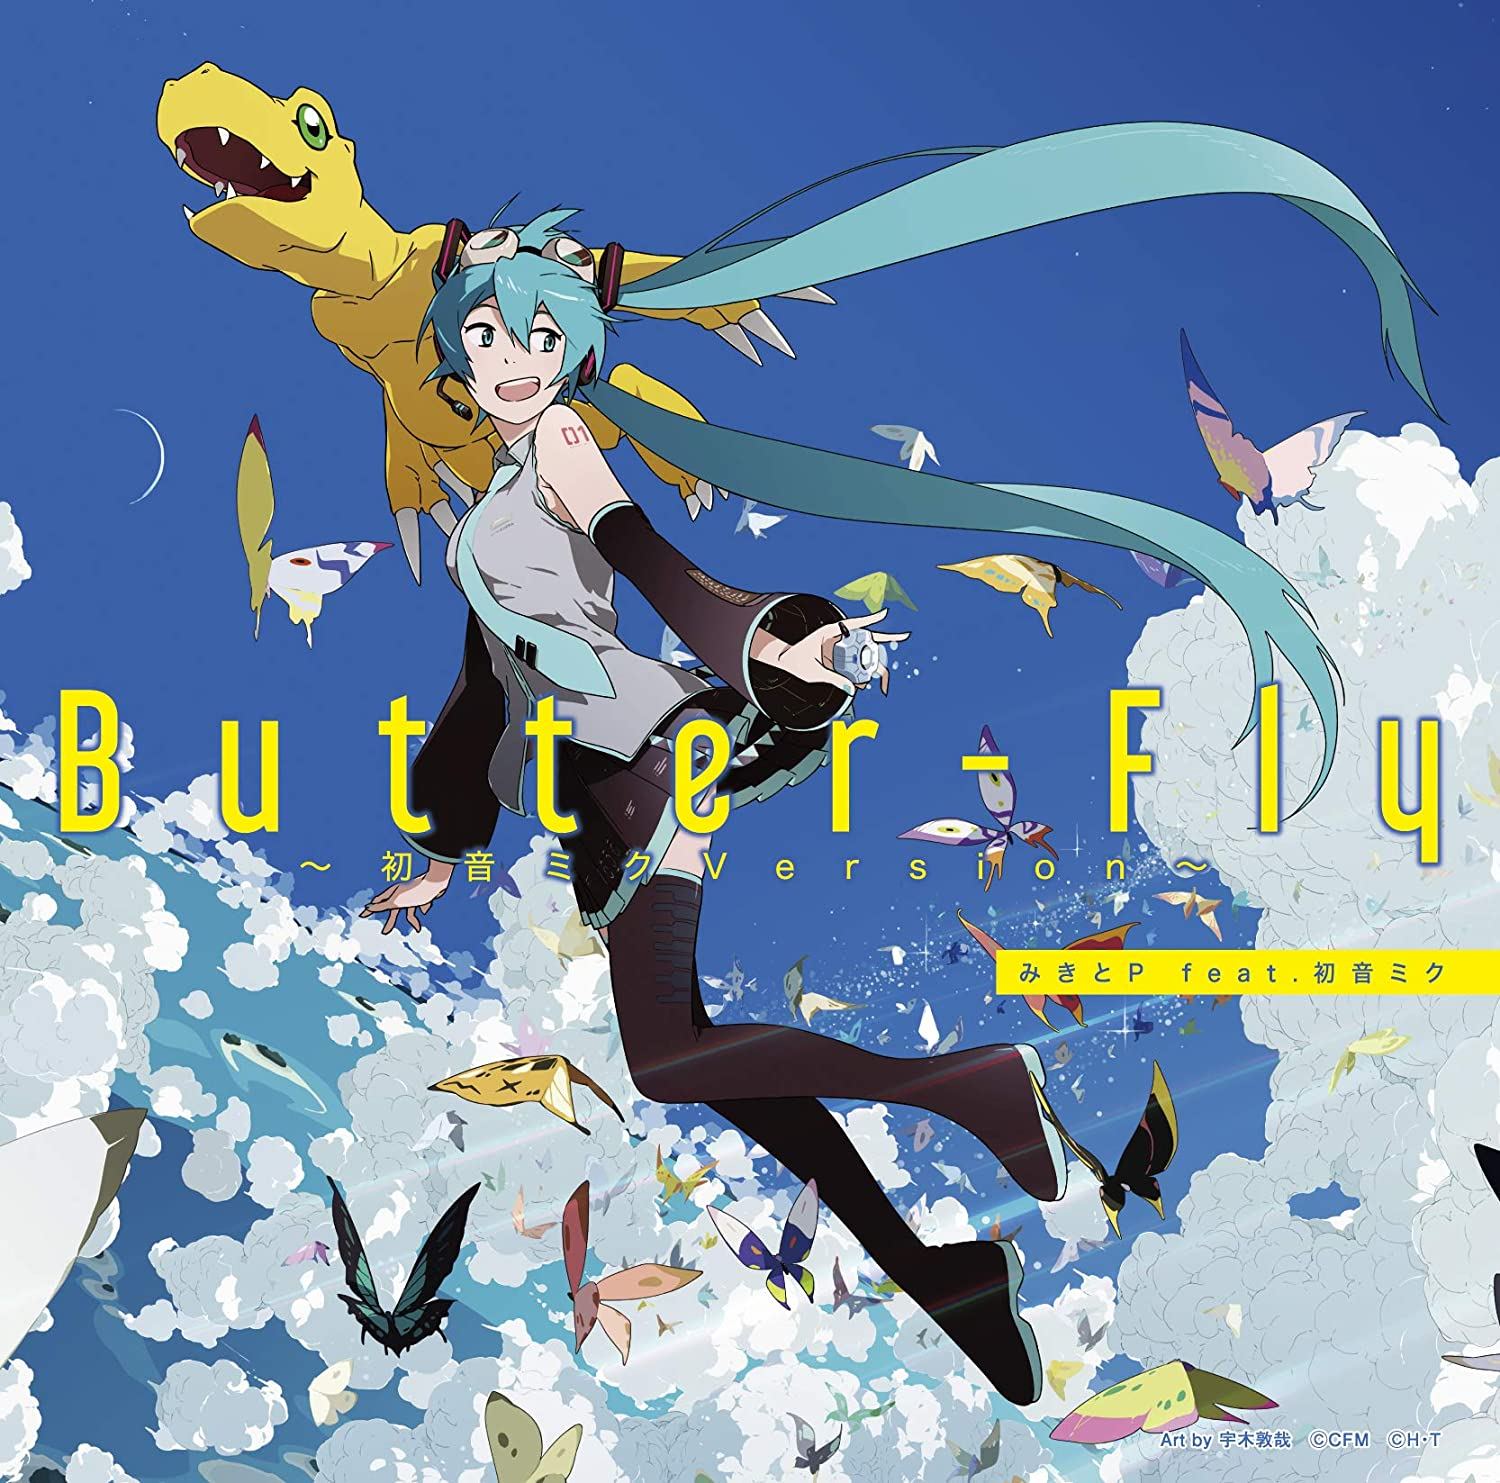 J Pop Butter Fly Hatsune Miku Version Cd Dvd Mikito P Feat Hatsune Miku